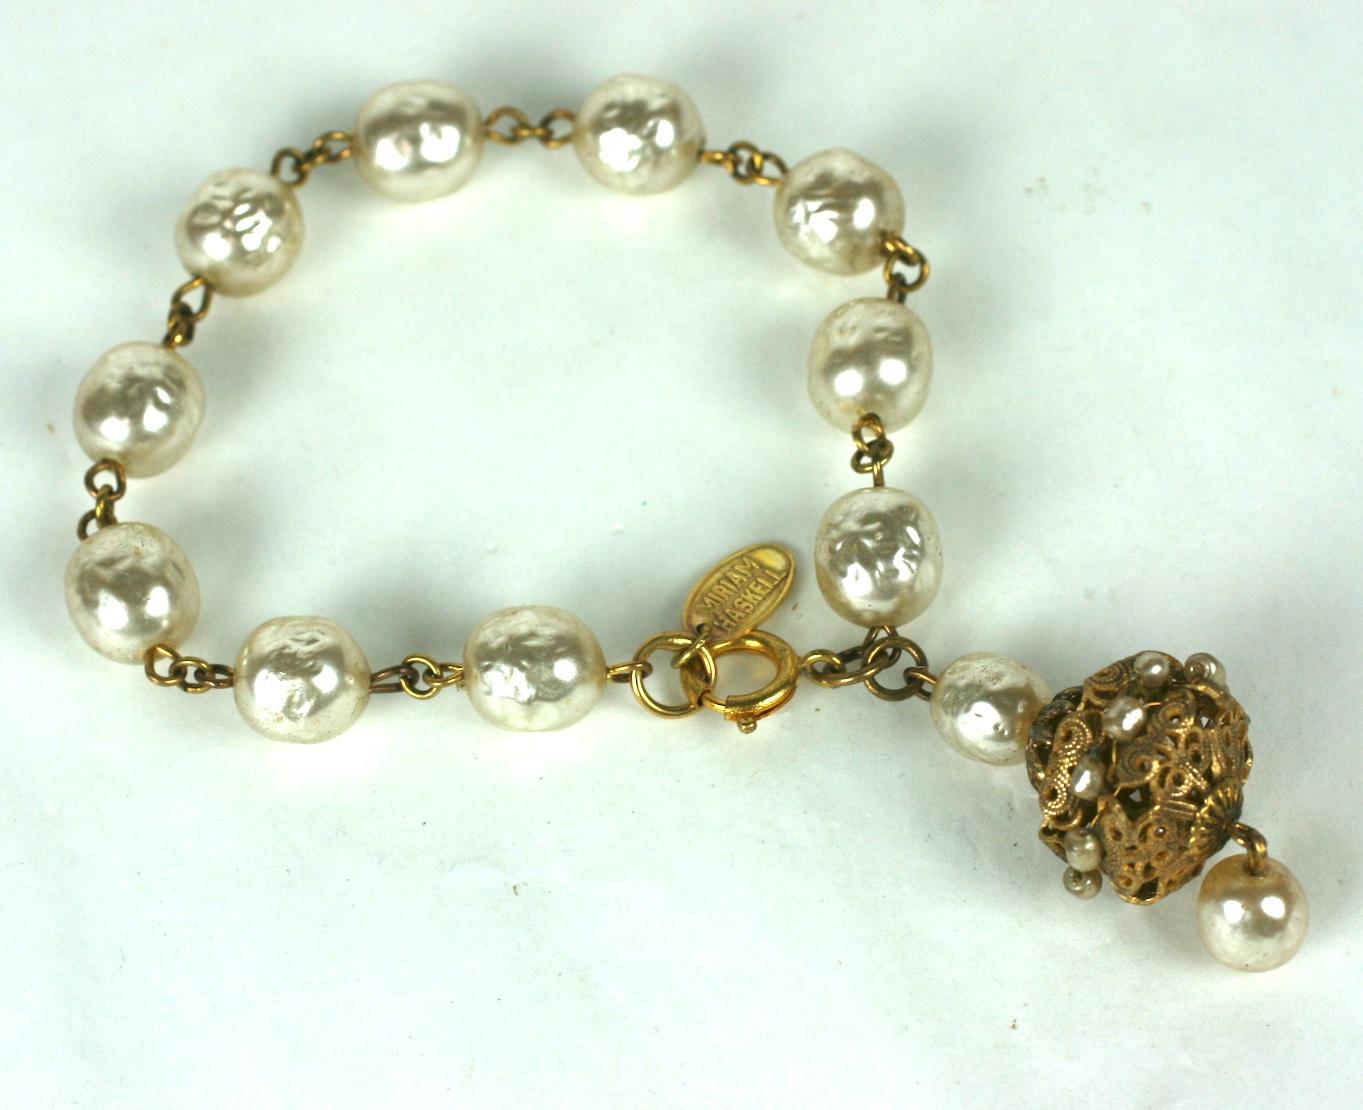 Bracelet fob Miriam Haskell en perles baroques et dorures. Composé de maillons en fausse perle baroque de la marque, avec une grande breloque percée en filigrane doré russe et en perle baroque. Le pendentif  la poignée en forme de filigrane est